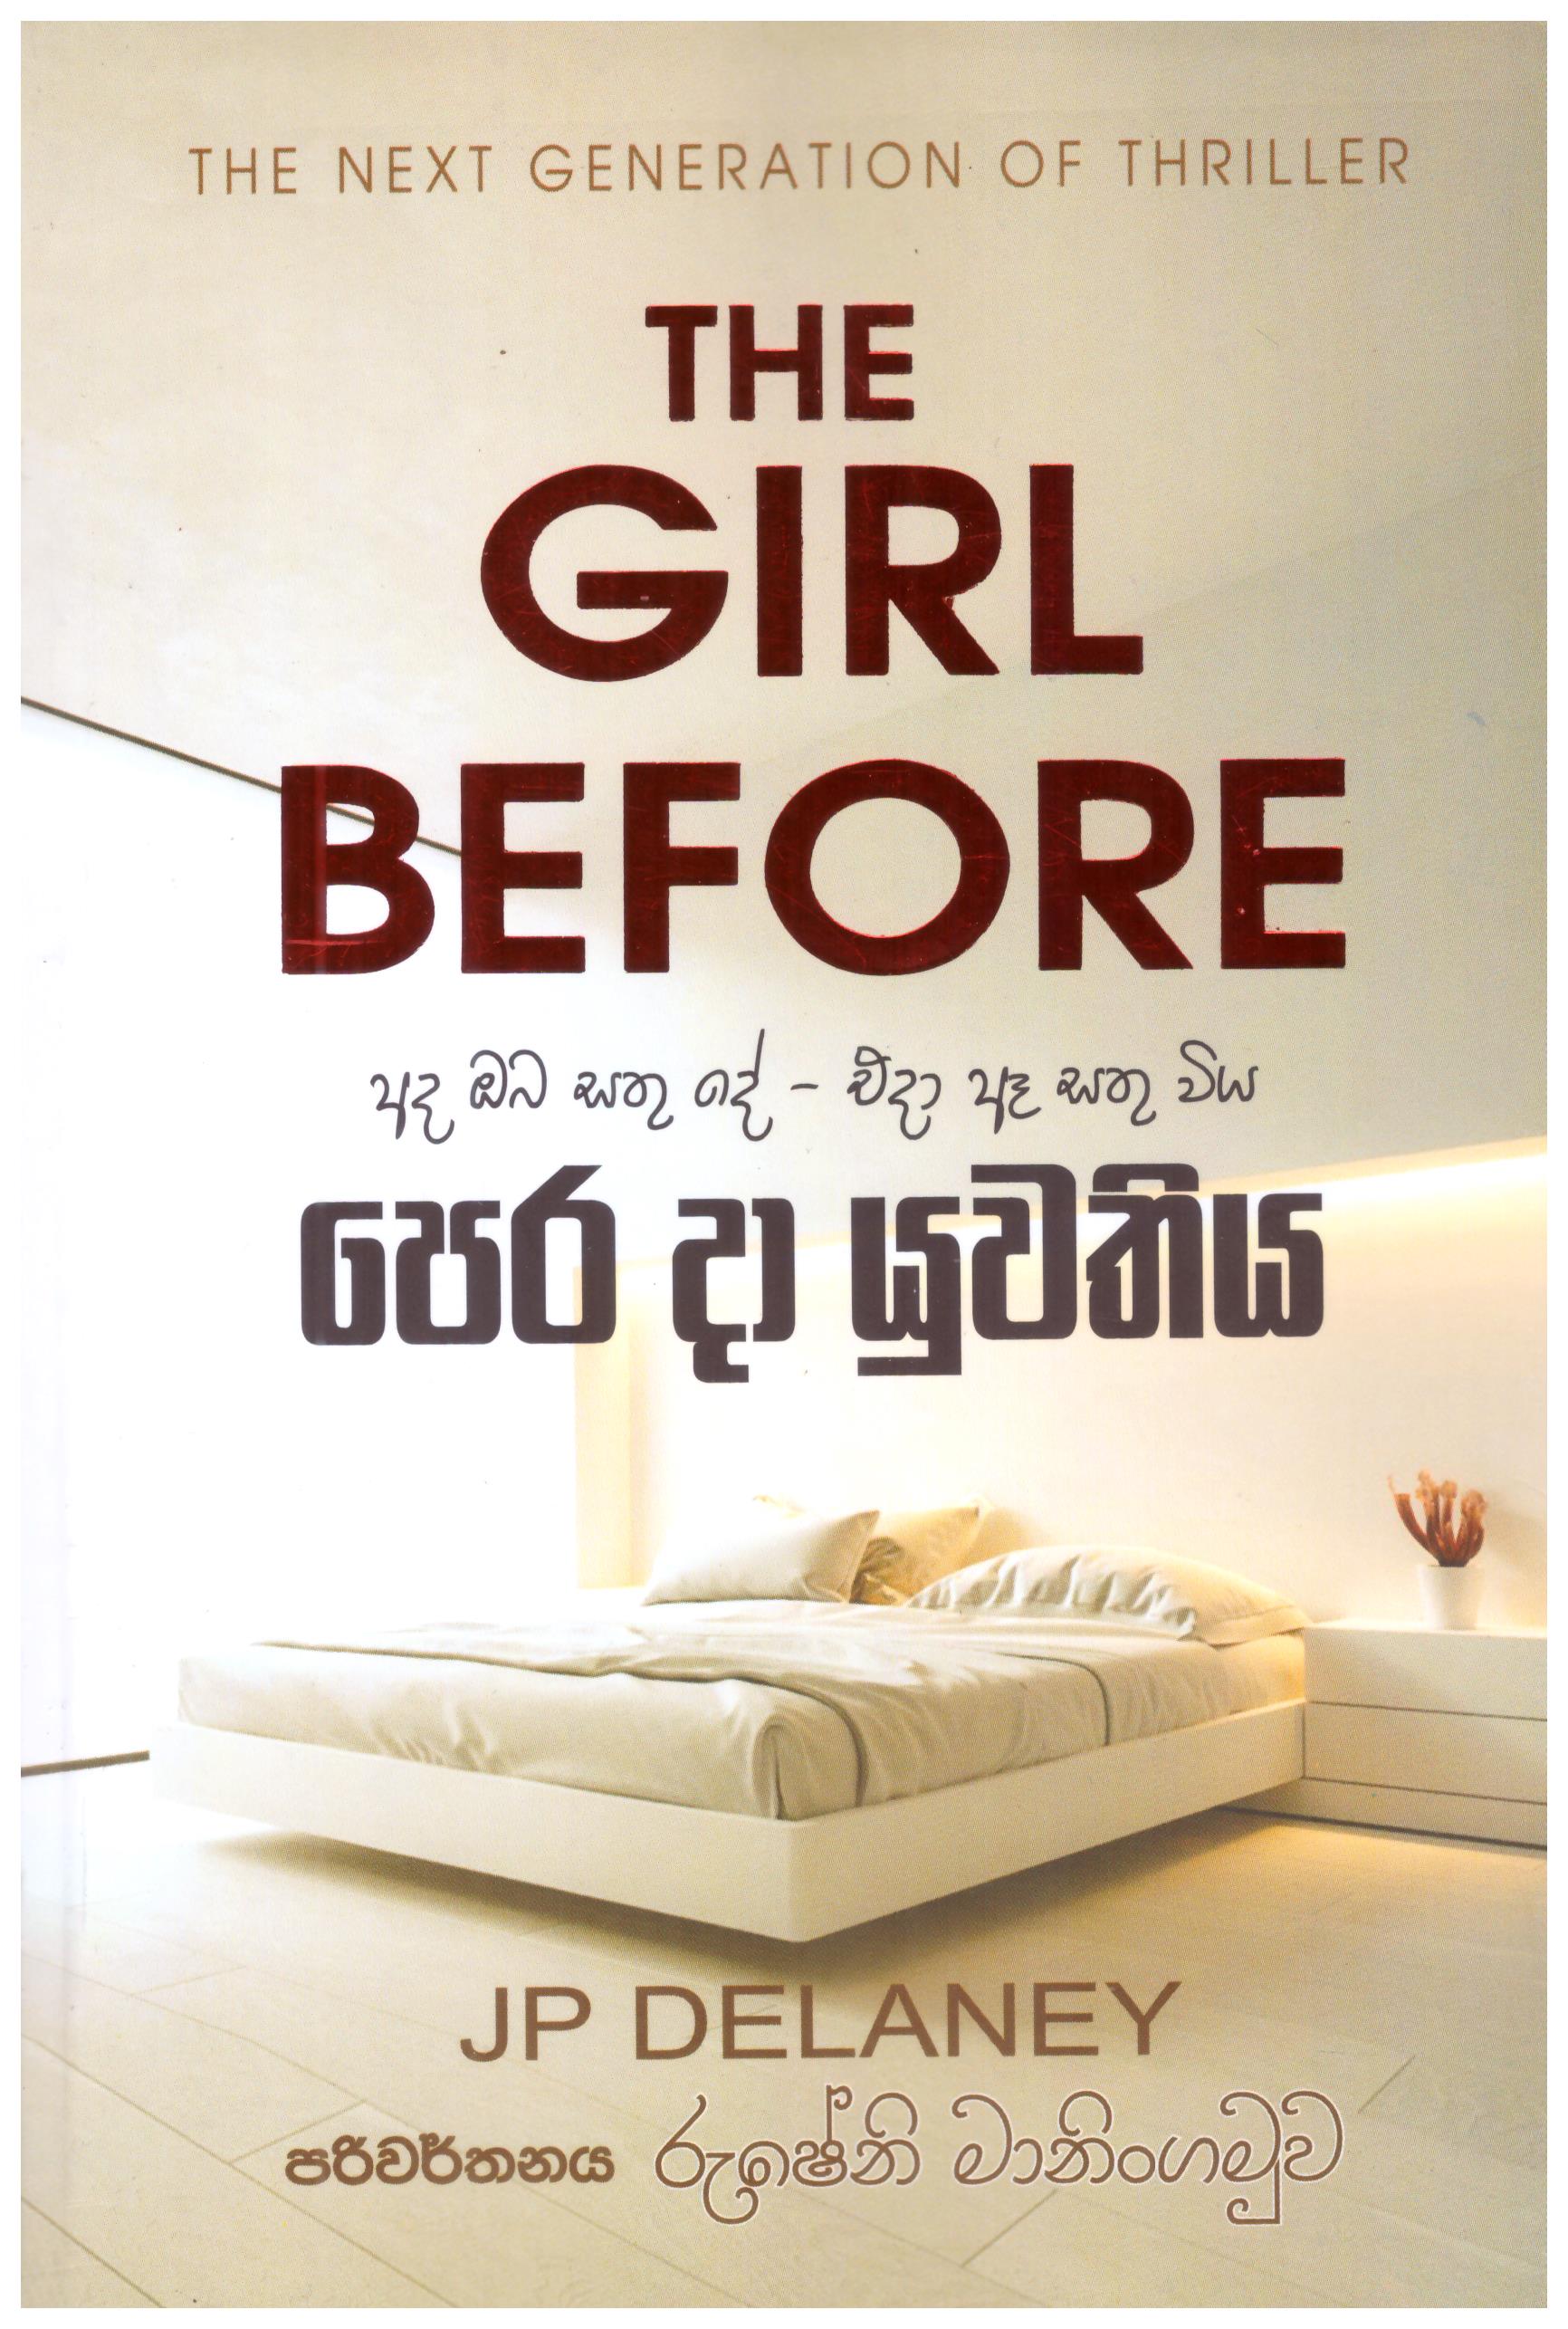 Pera Da Yuwathiya - Translation of The Girl Before By JP Delaney